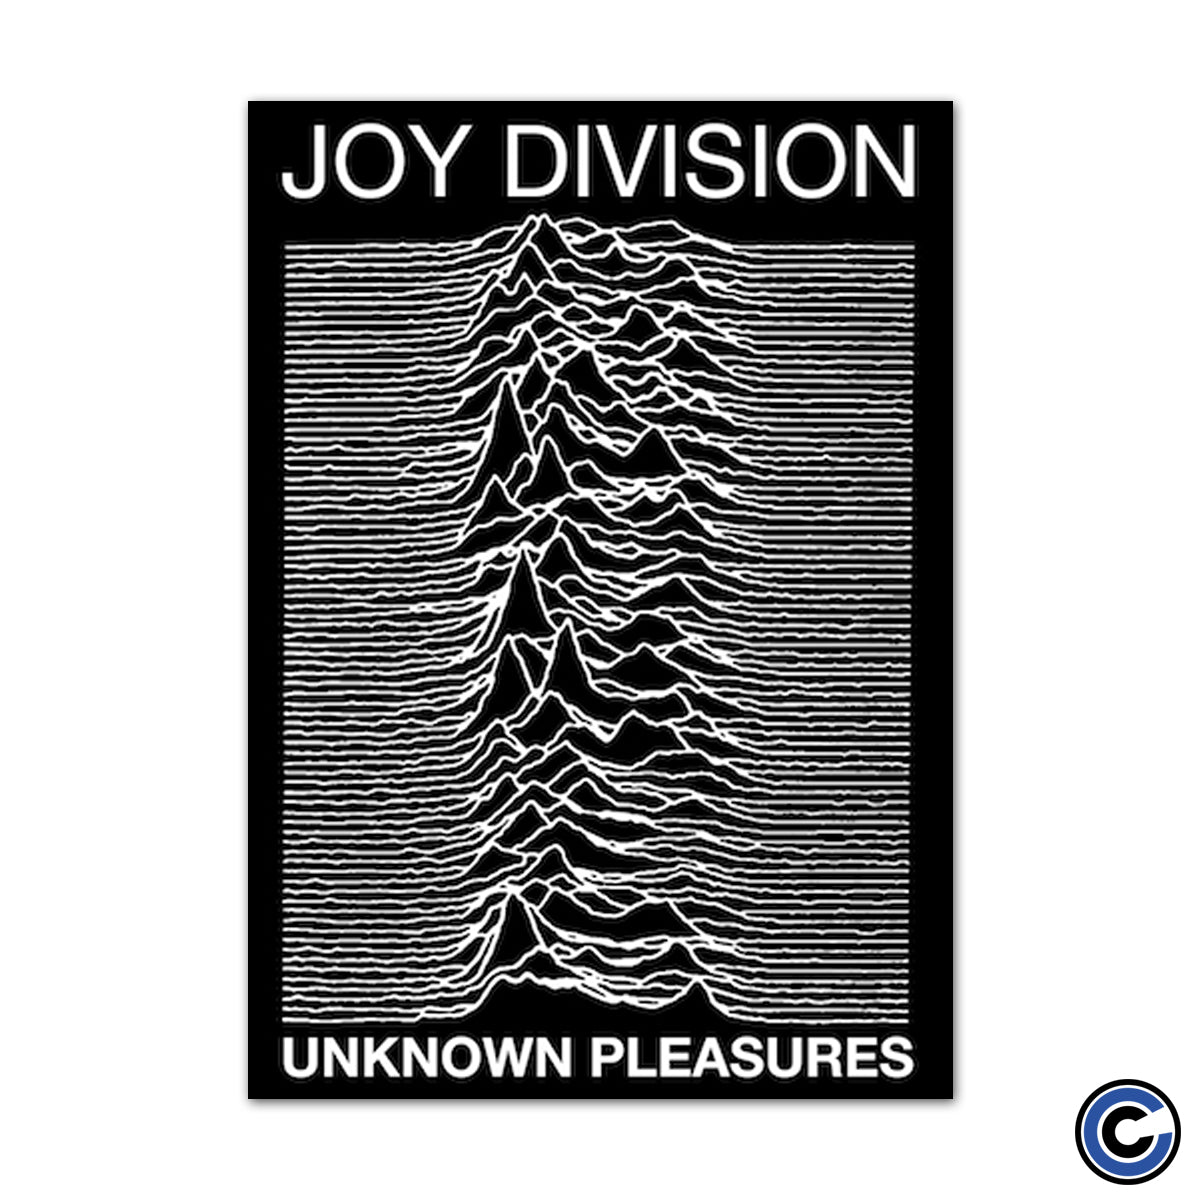 Joy Division "Unknown Pleasures" Poster